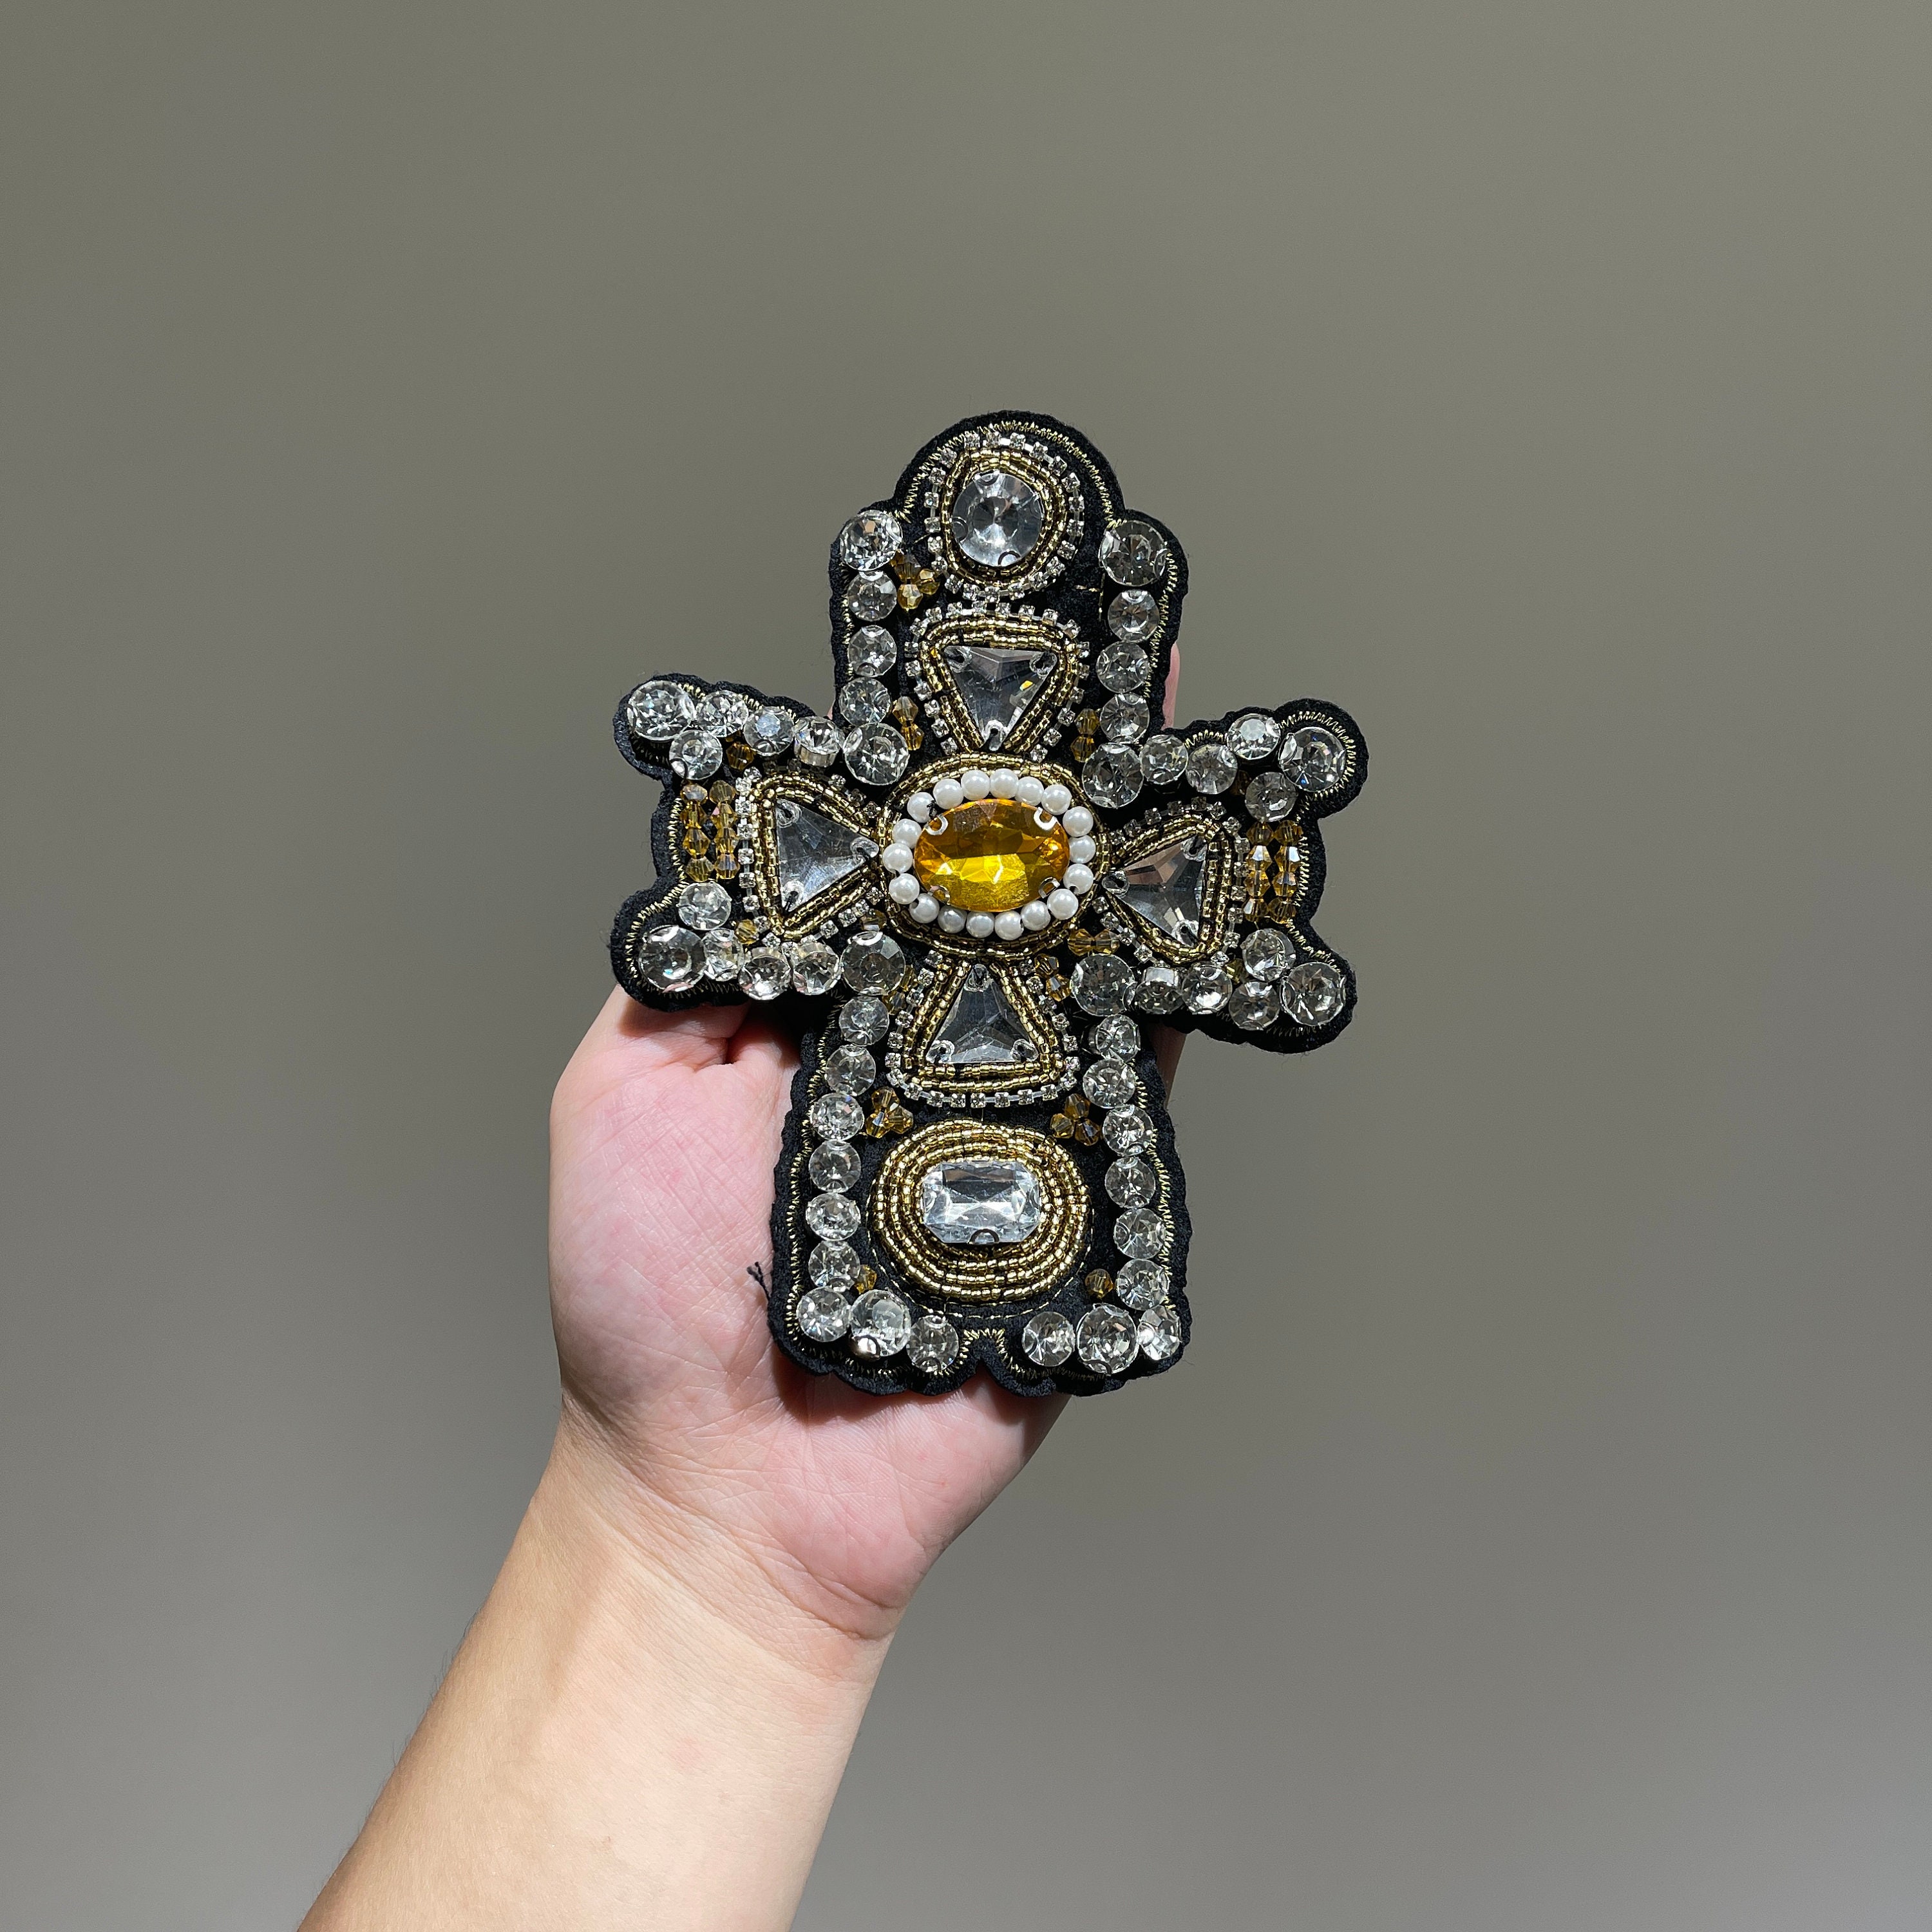 Iron on Rhinestone Cross Patches – Fifi's Craft